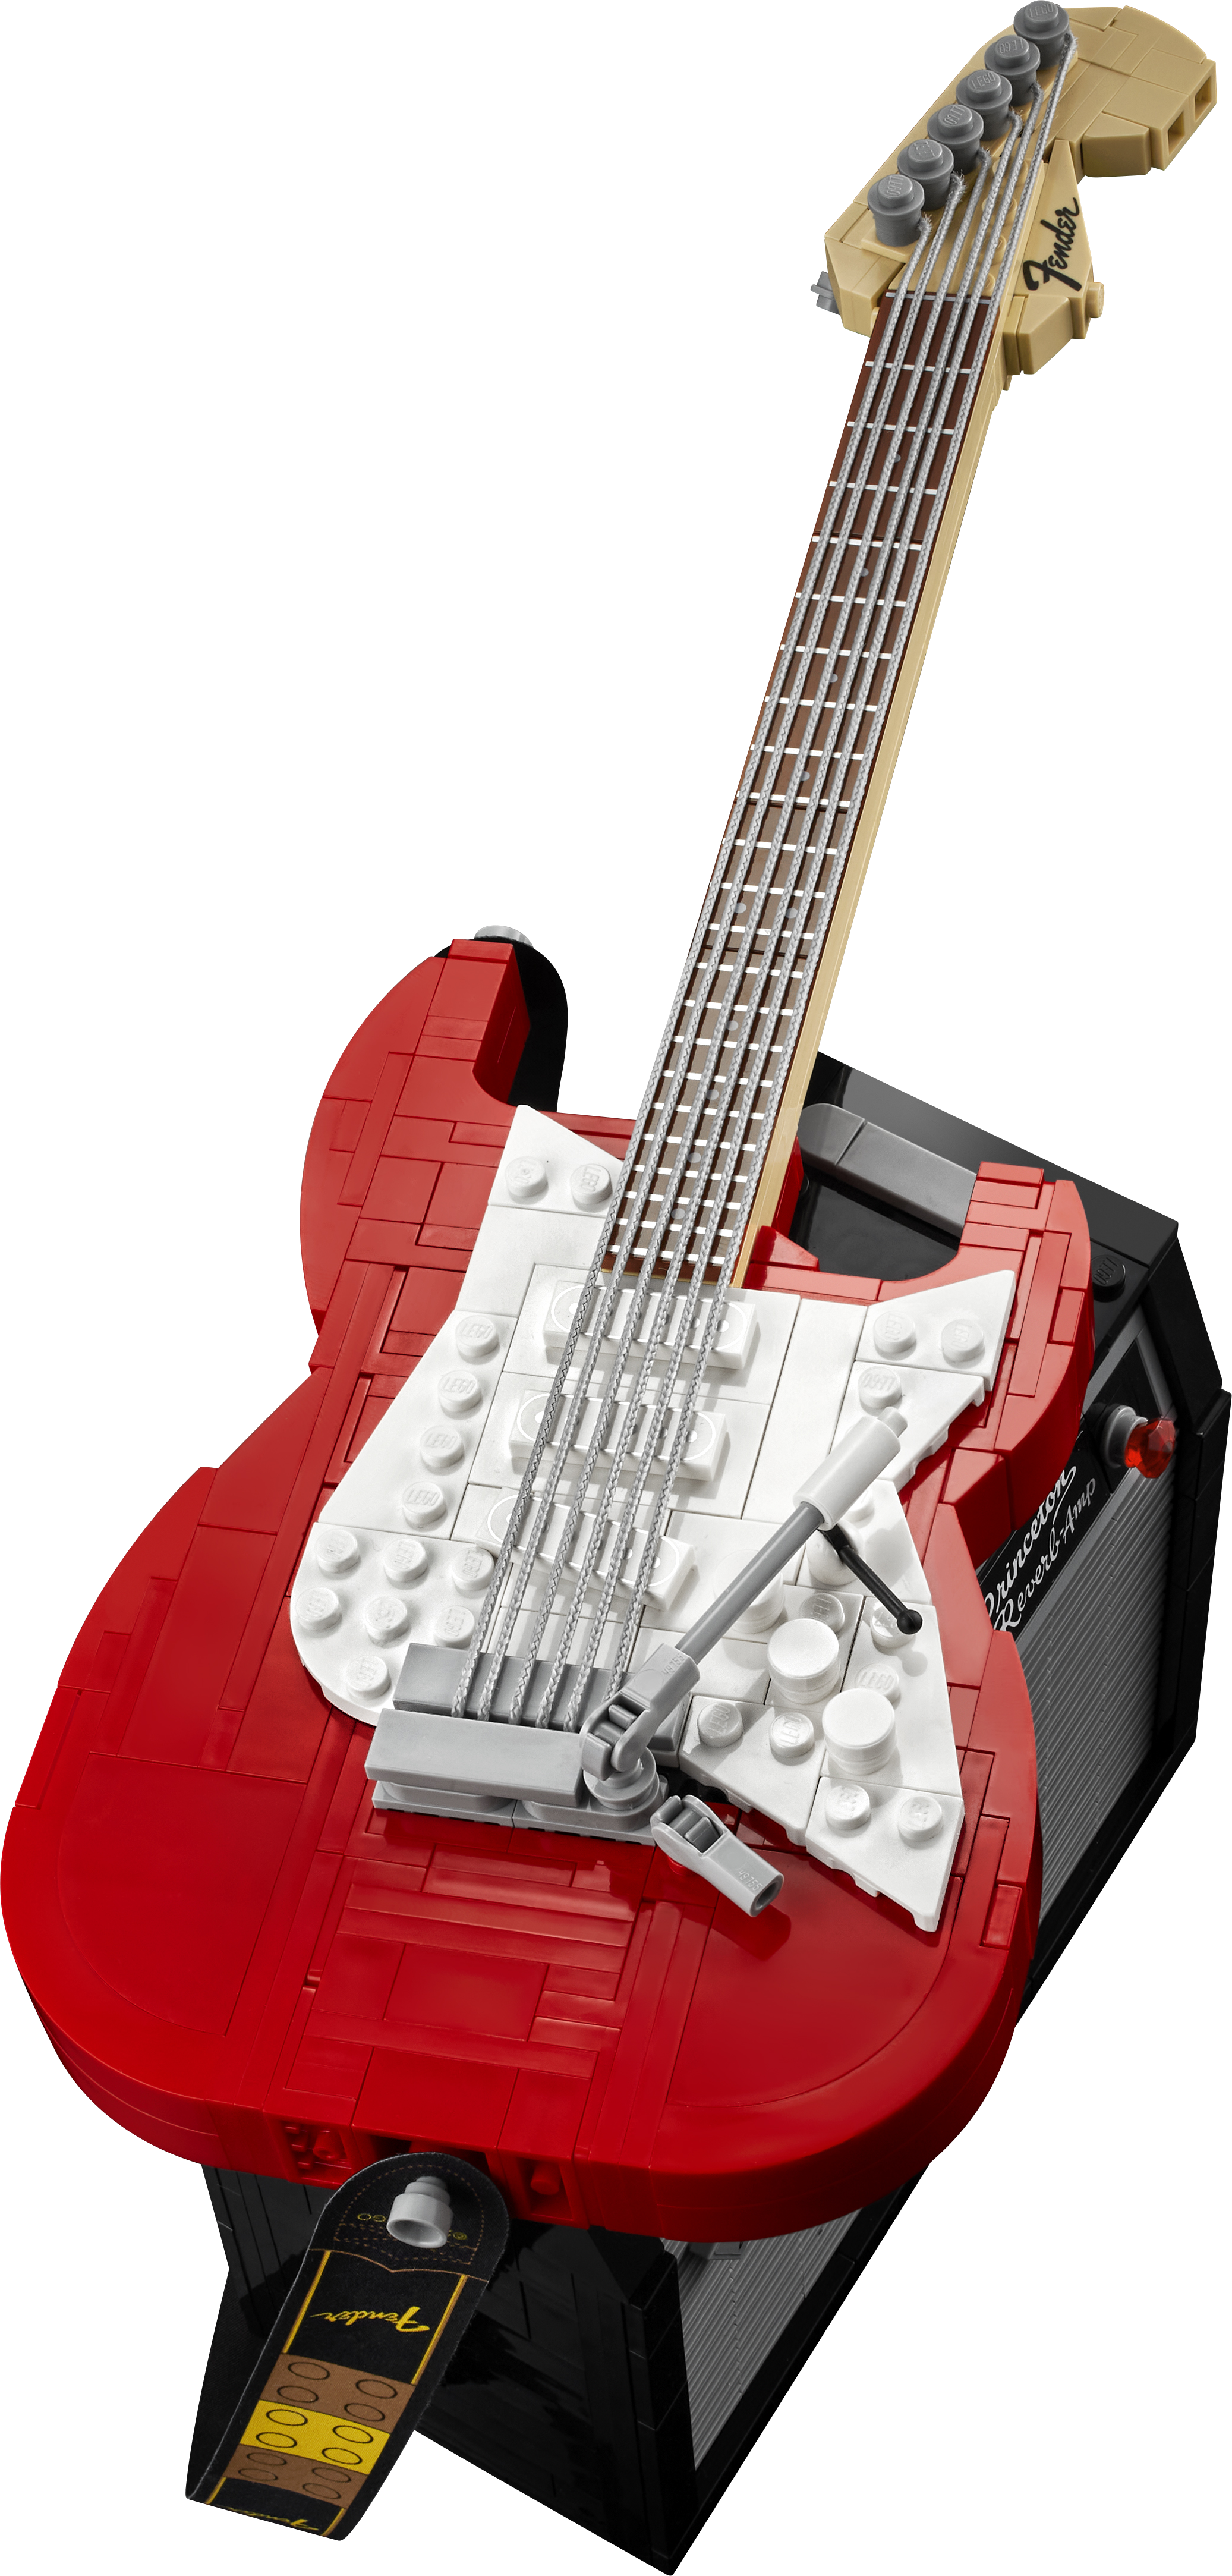  LEGO Ideas Fender Stratocaster 21329 DIY Guitar Model